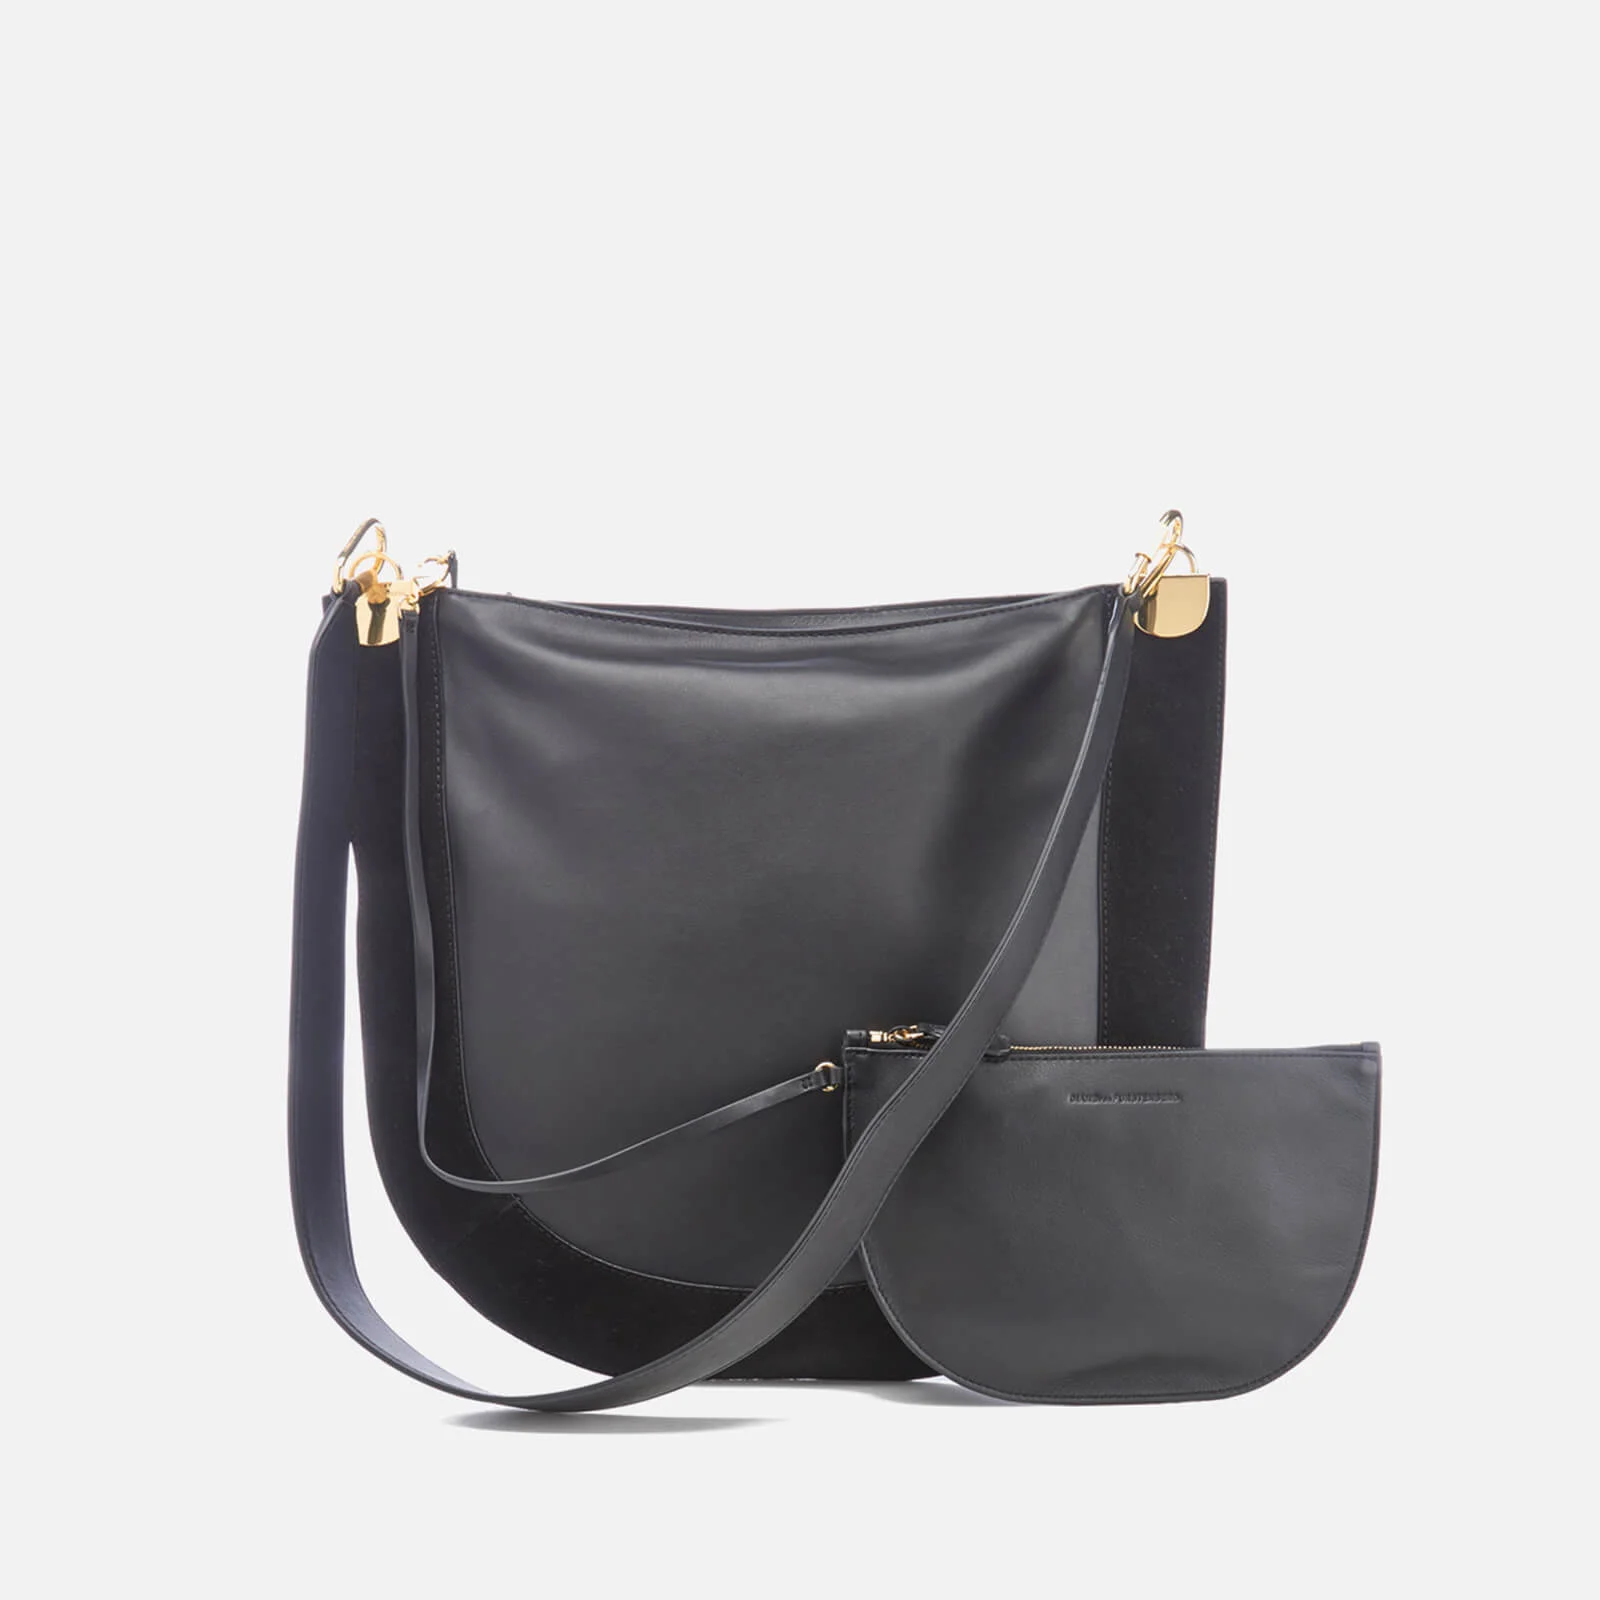 Diane von Furstenberg Women's Moon Leather/Suede Cross Body Bag - Black Image 1